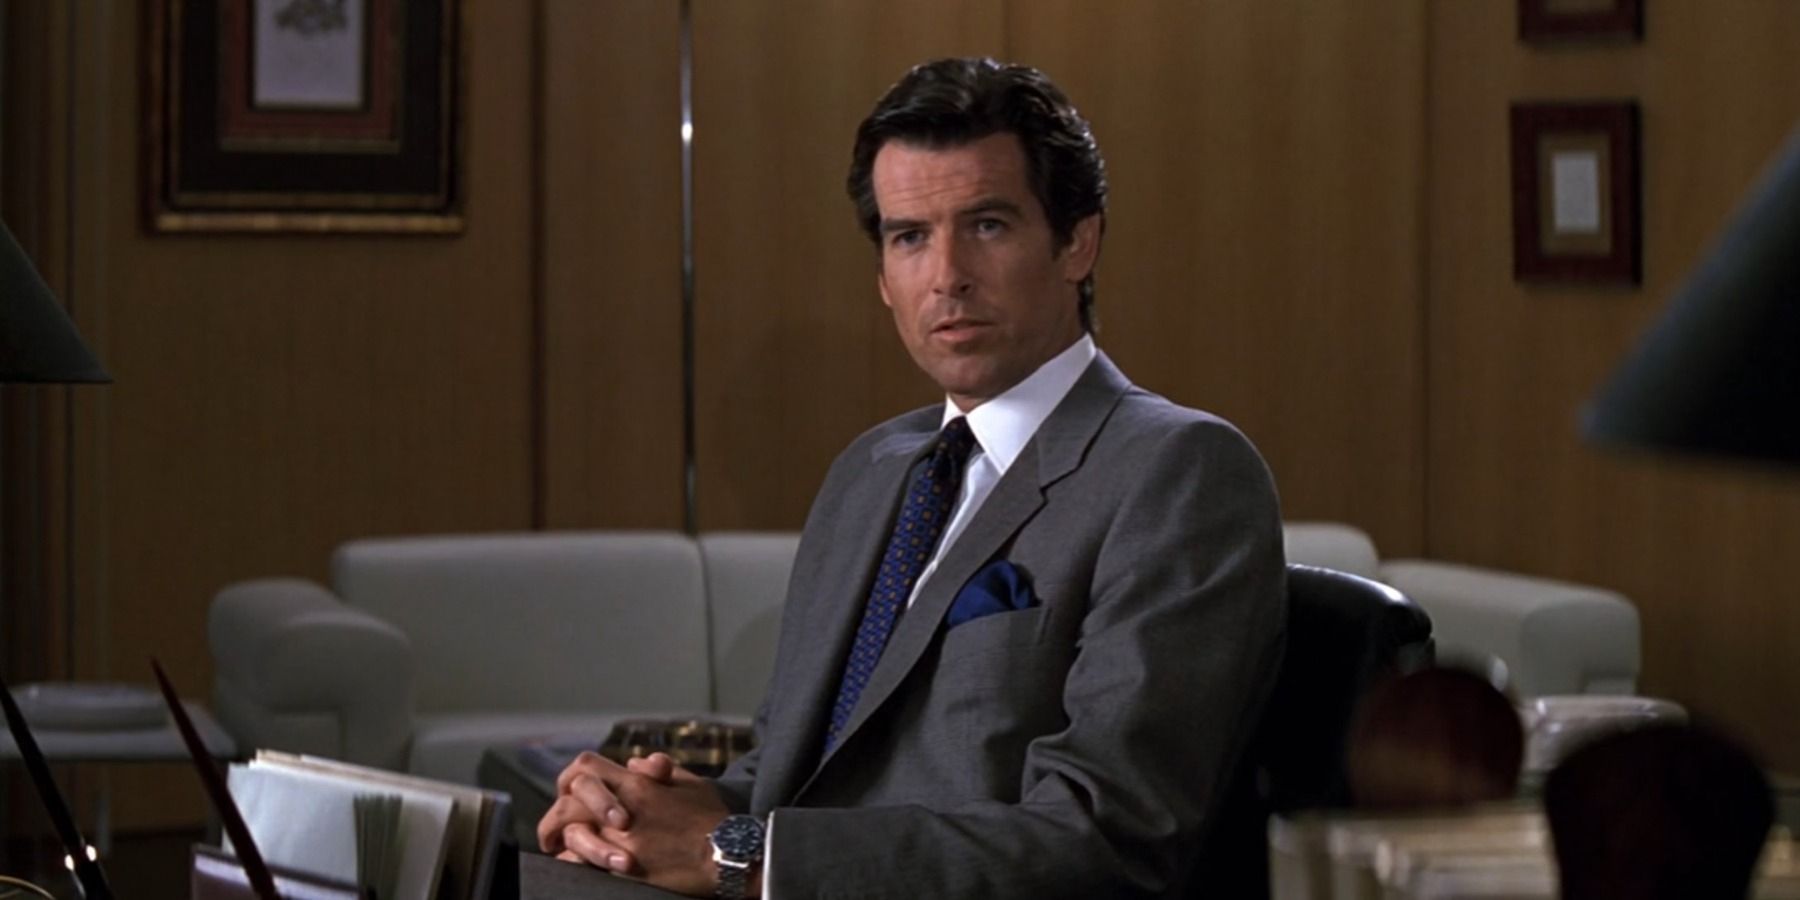 Pierce Brosnan as James Bond in M's office